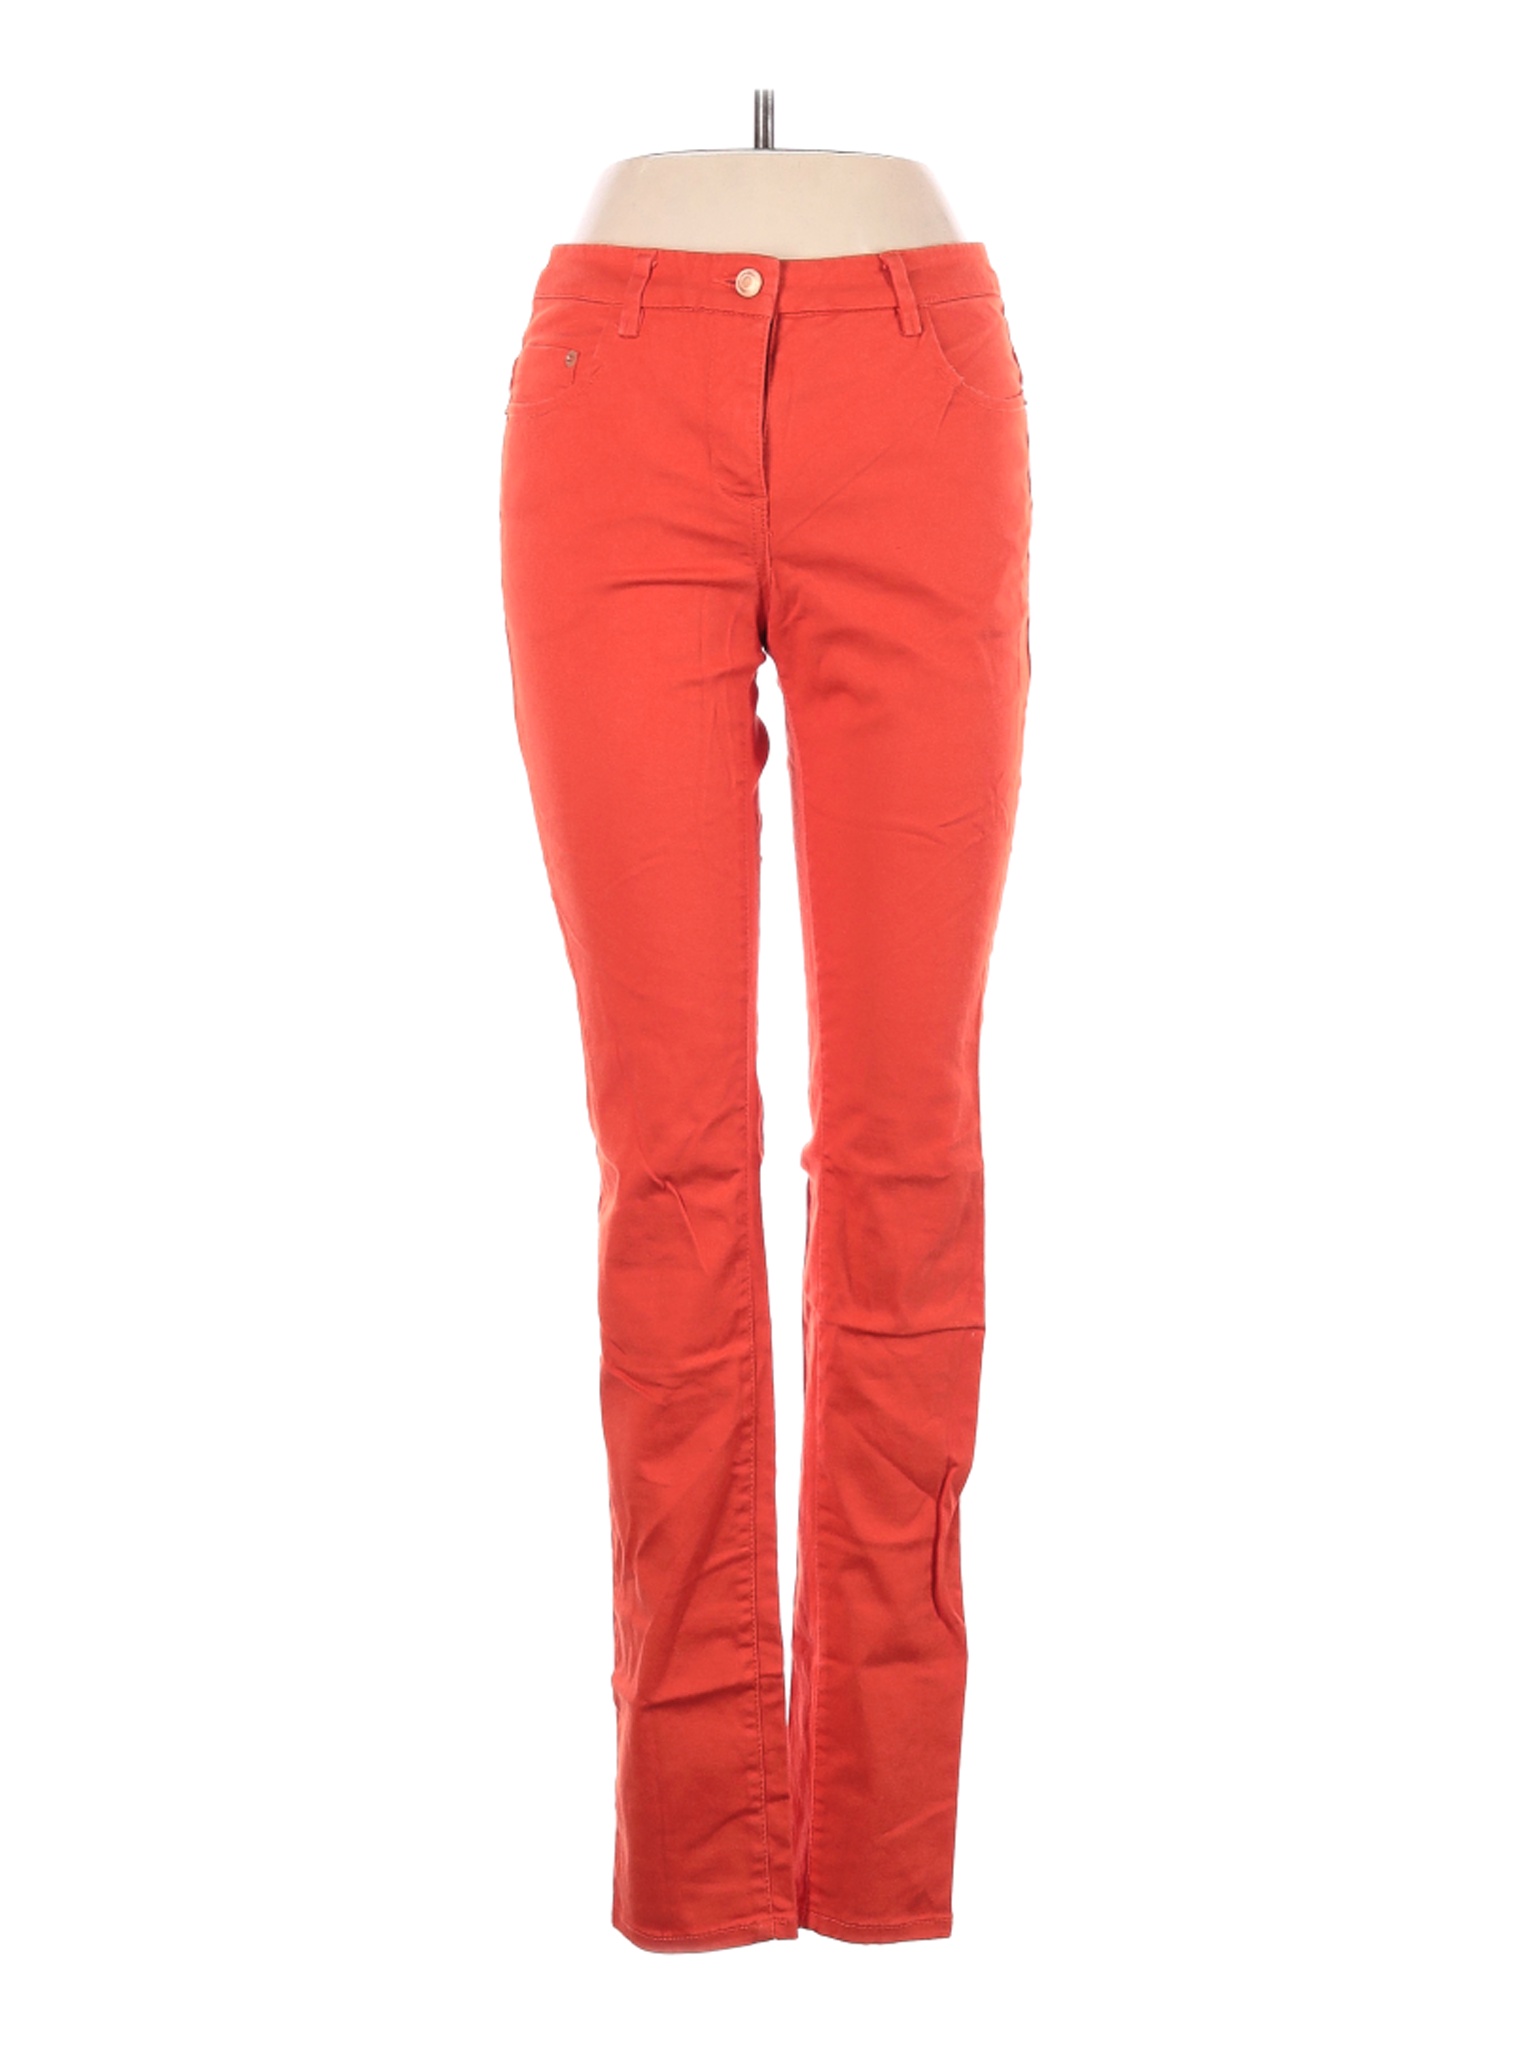 H&M Women Pink Jeans 4 | eBay